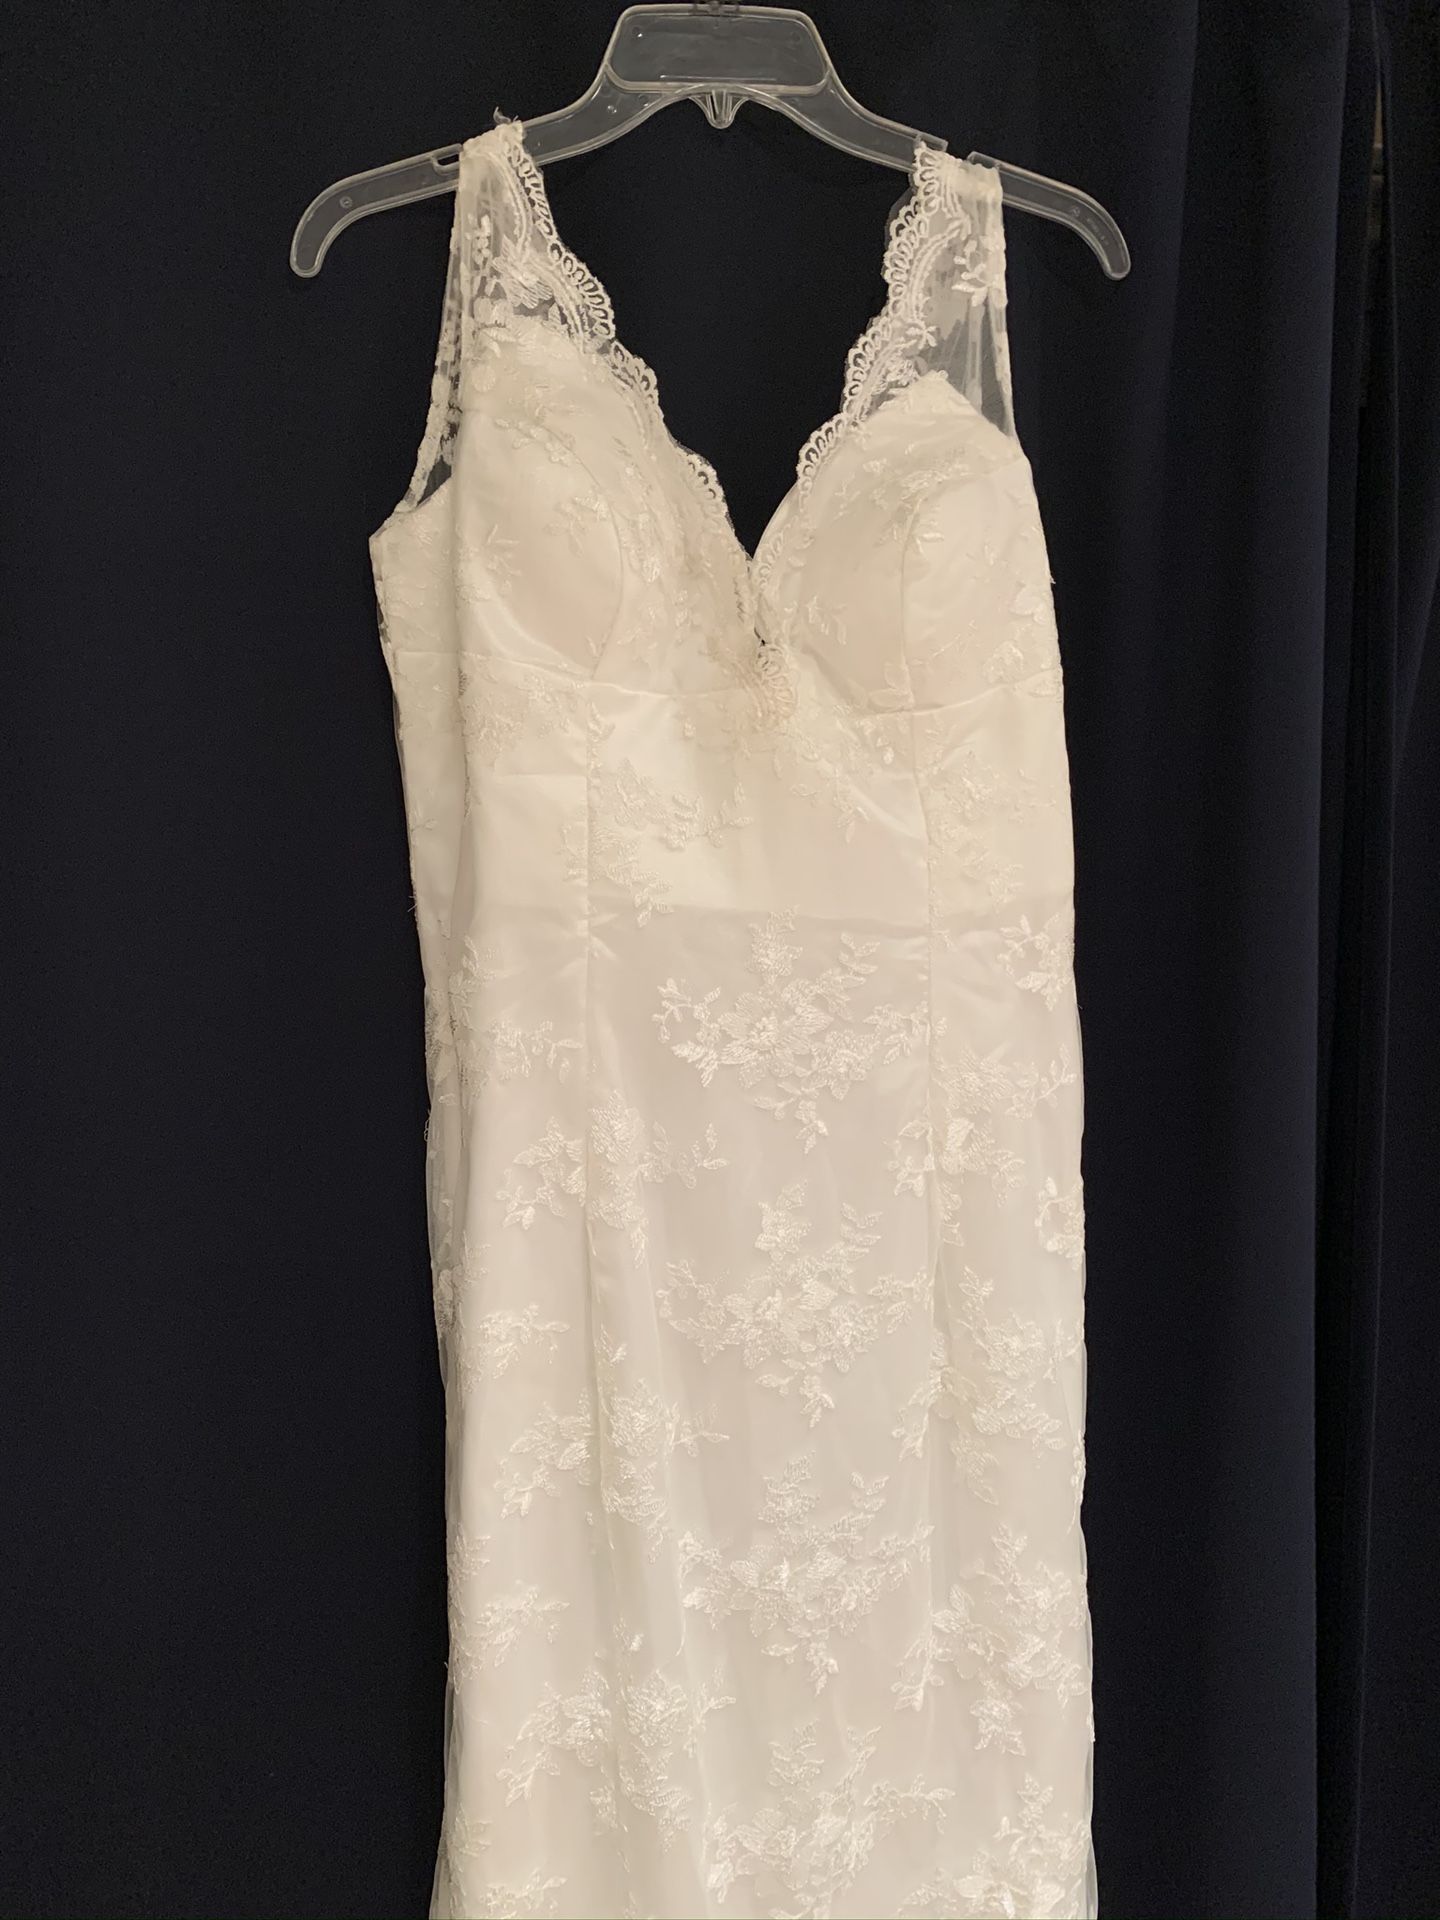 Lace Wedding Dress, size 10